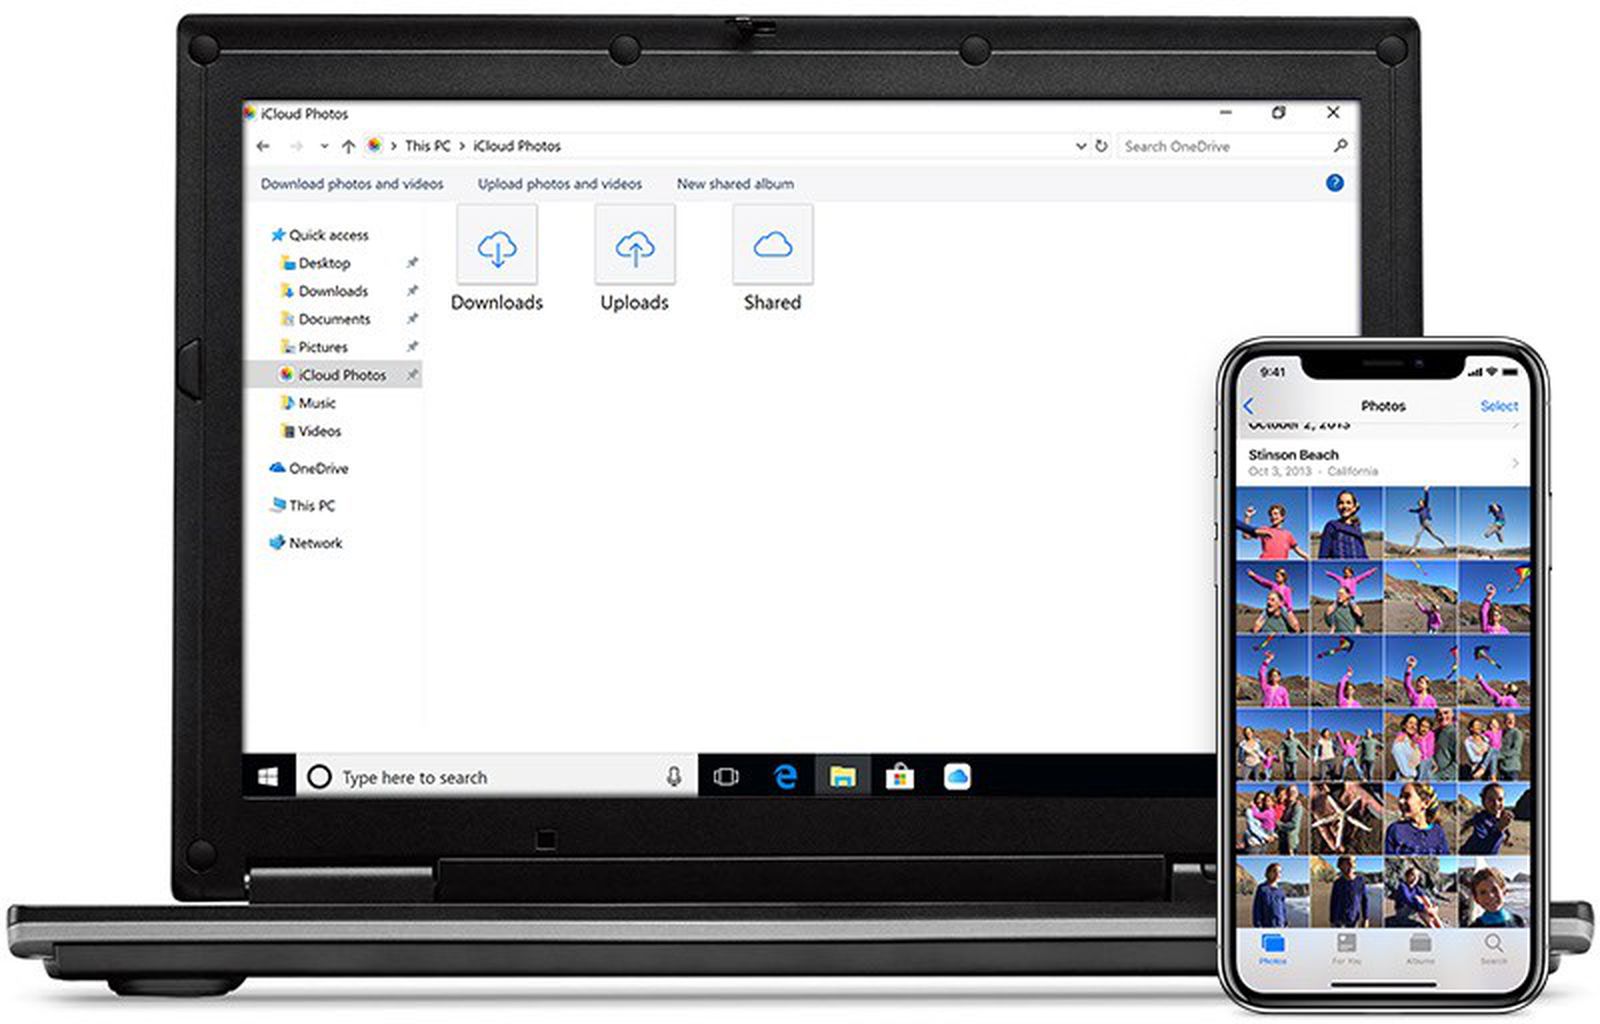 windows 7 on macbook pro display issue